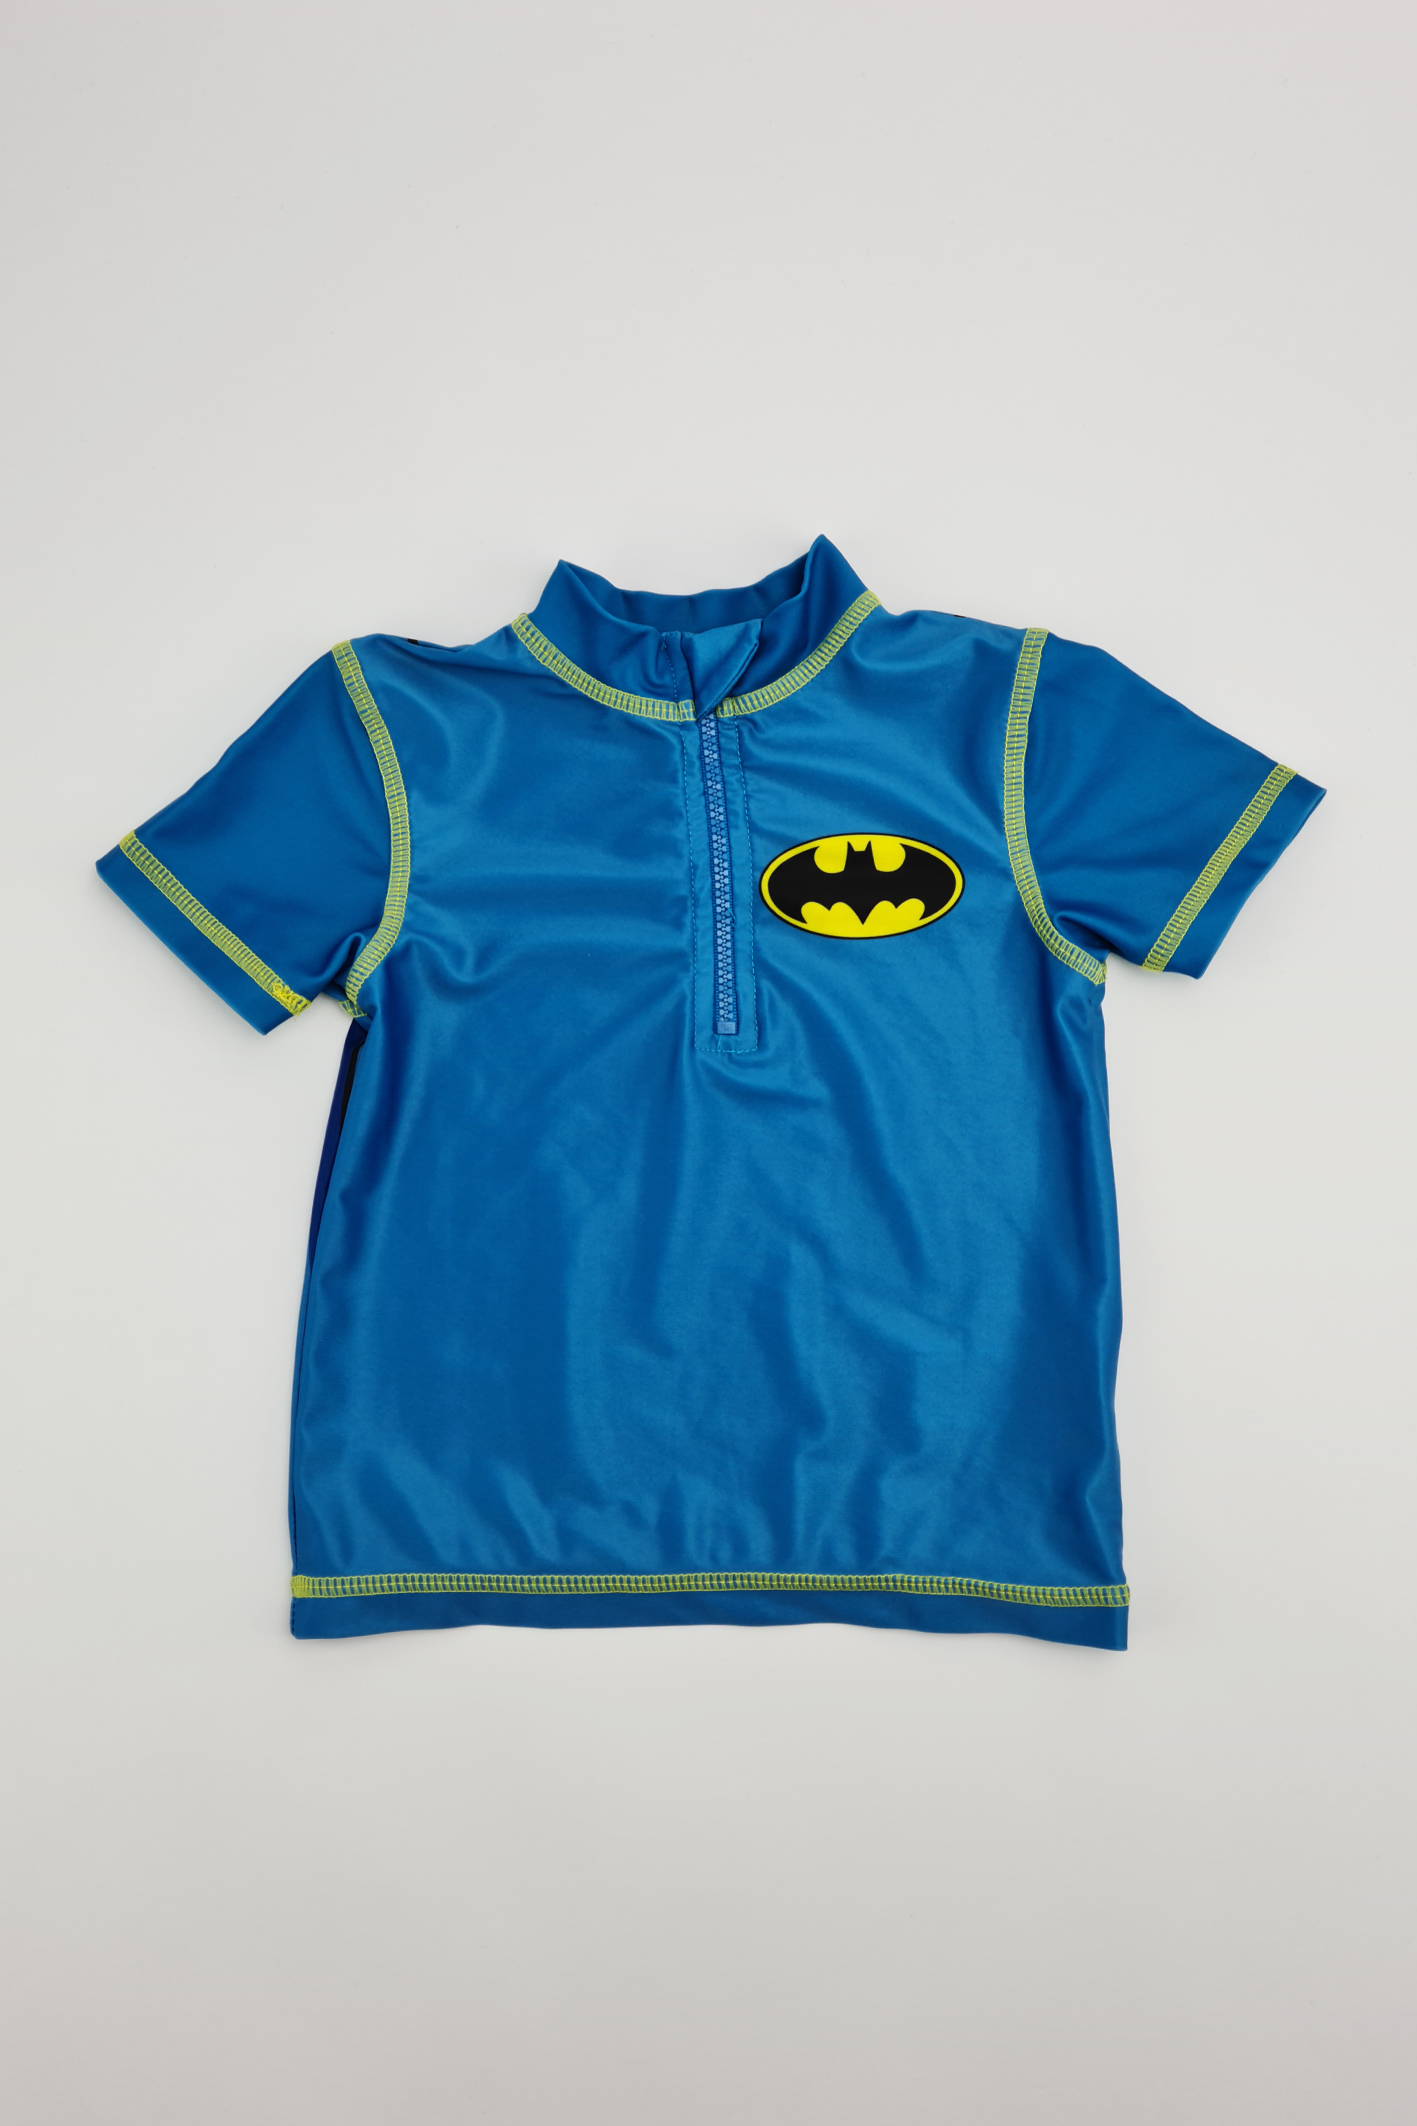 Batman Swimming Top - Precuddled.com